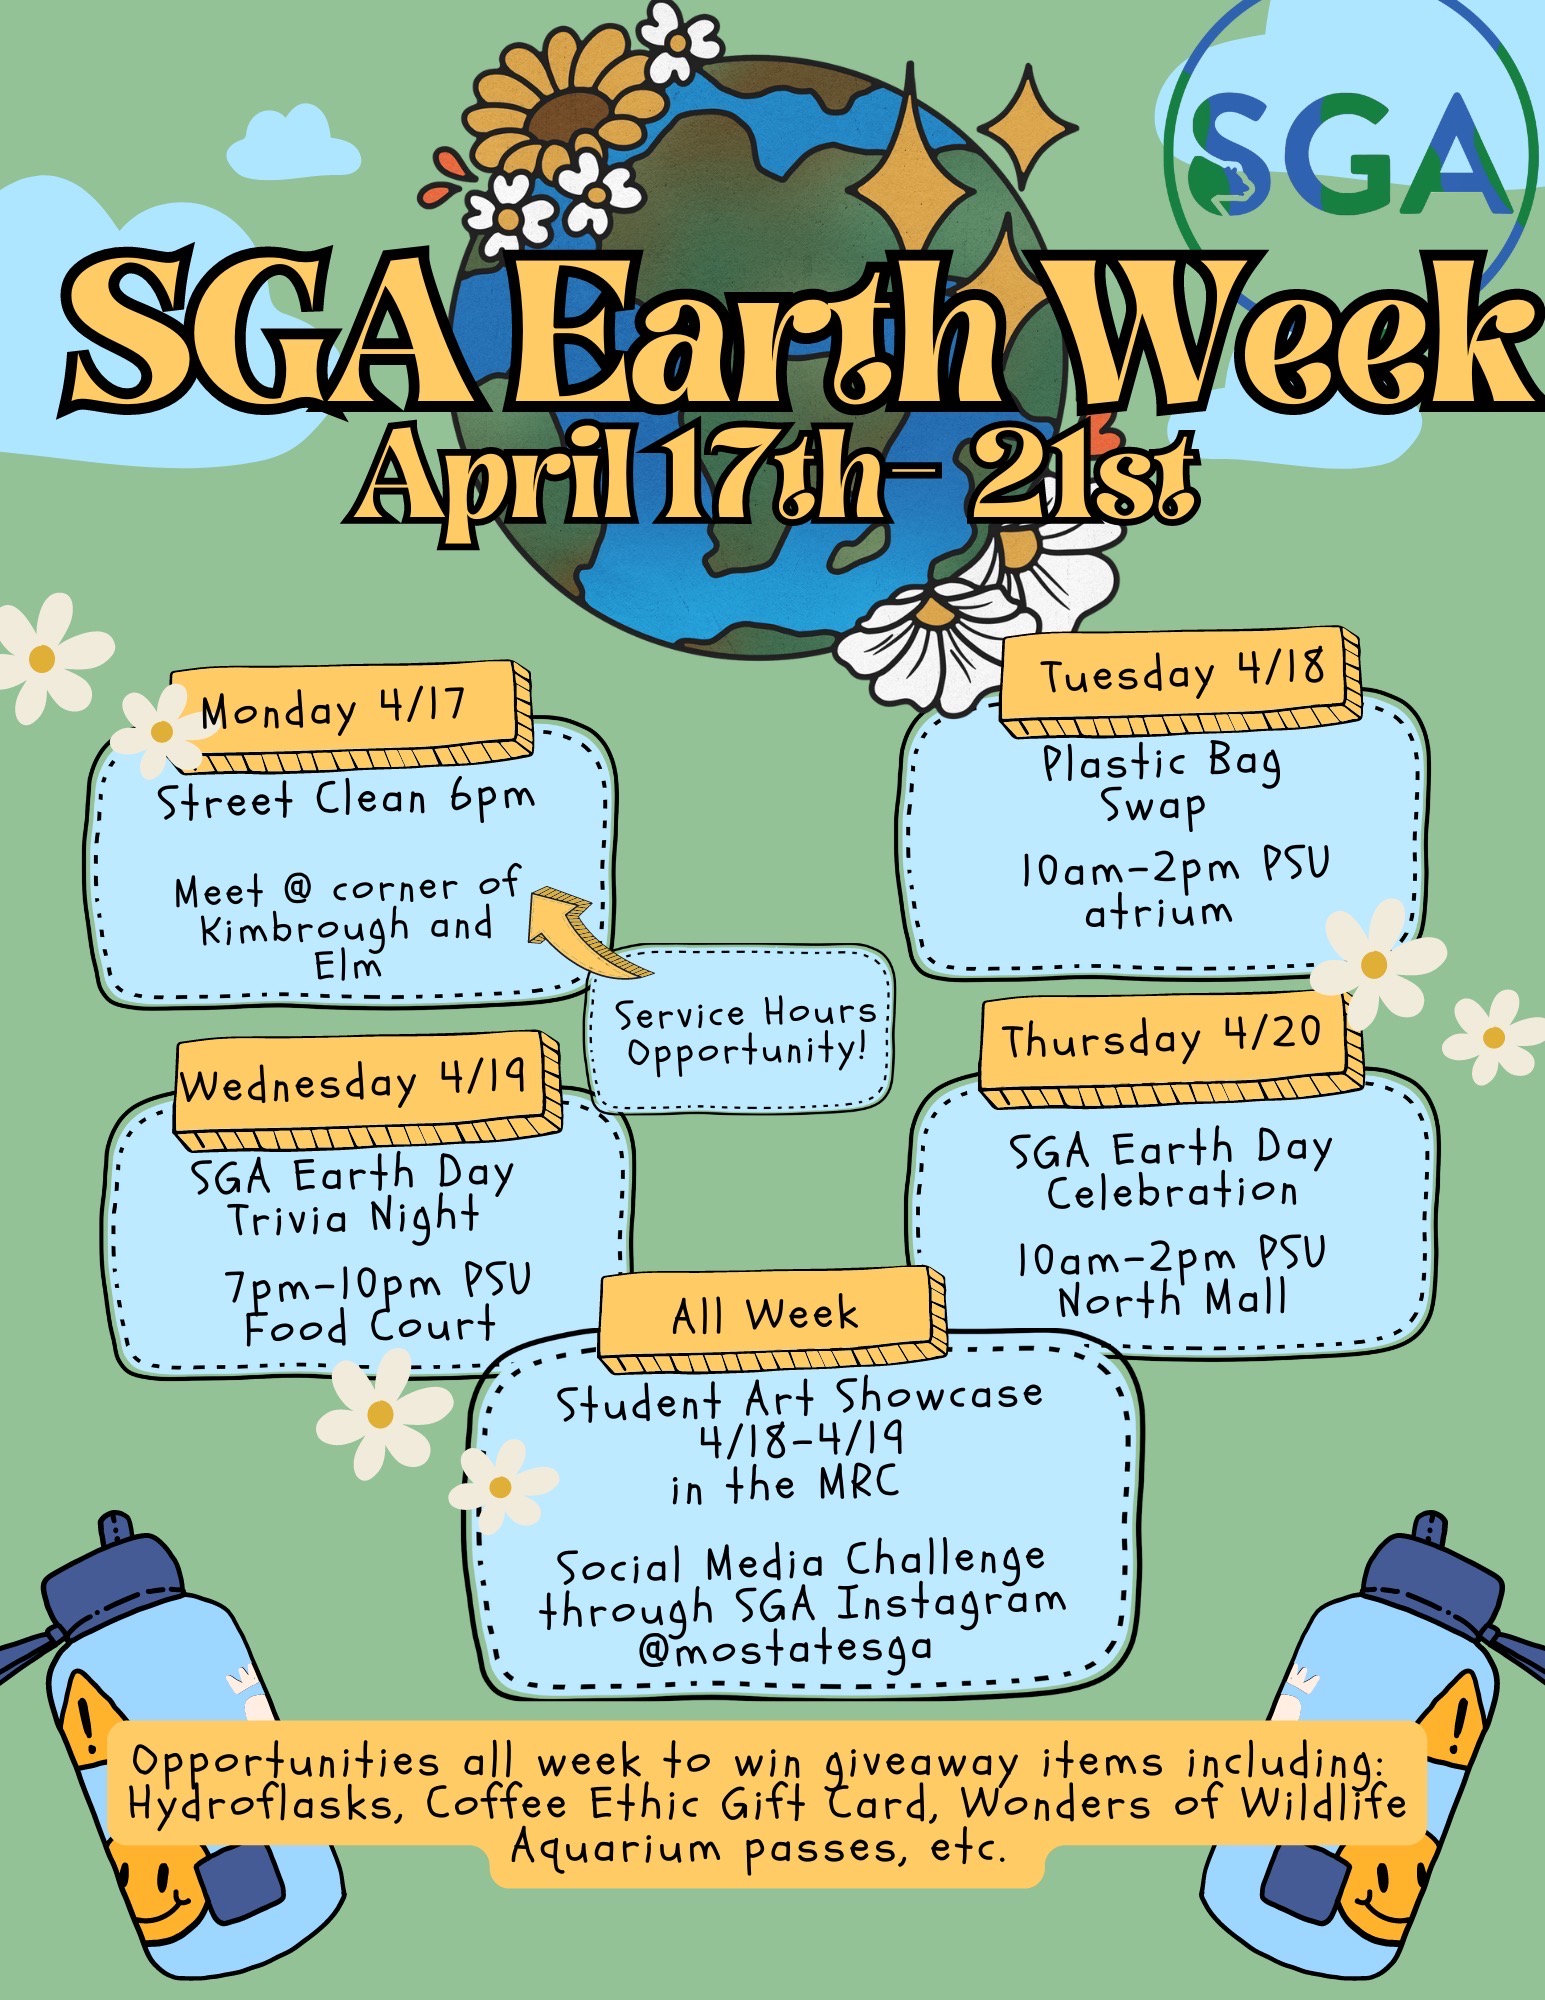 Earth Week events